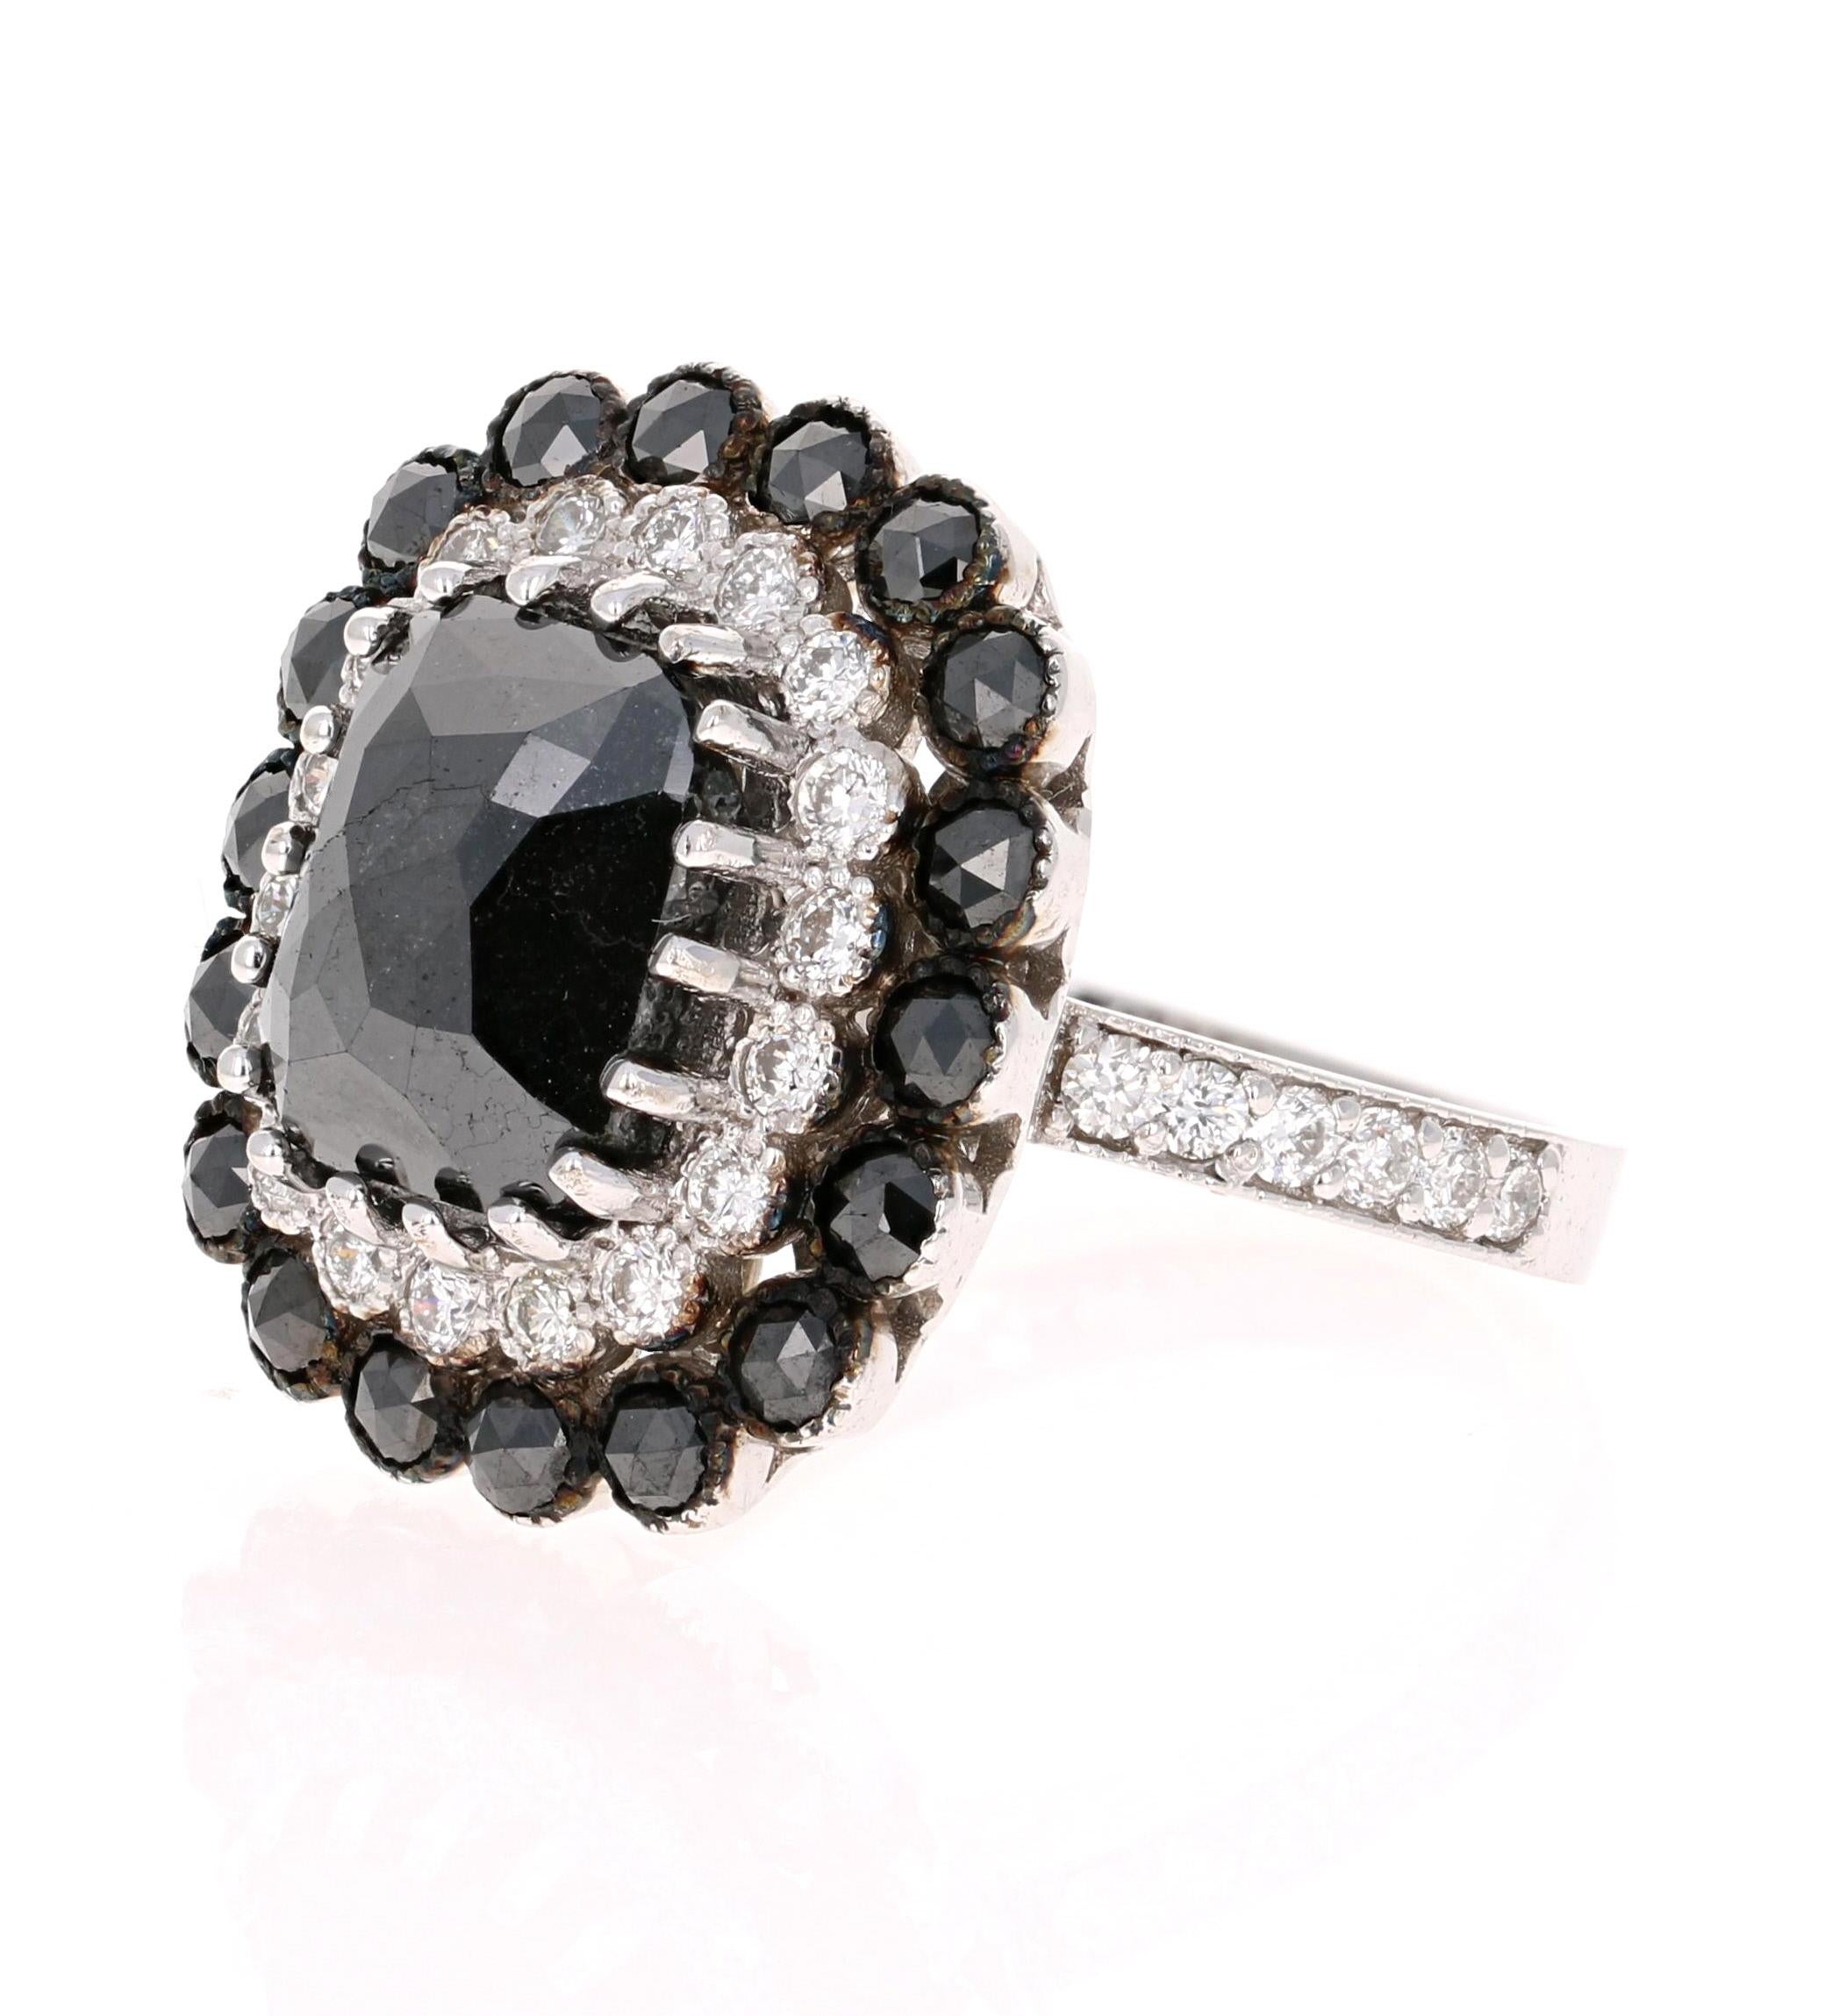 14 carat black diamond